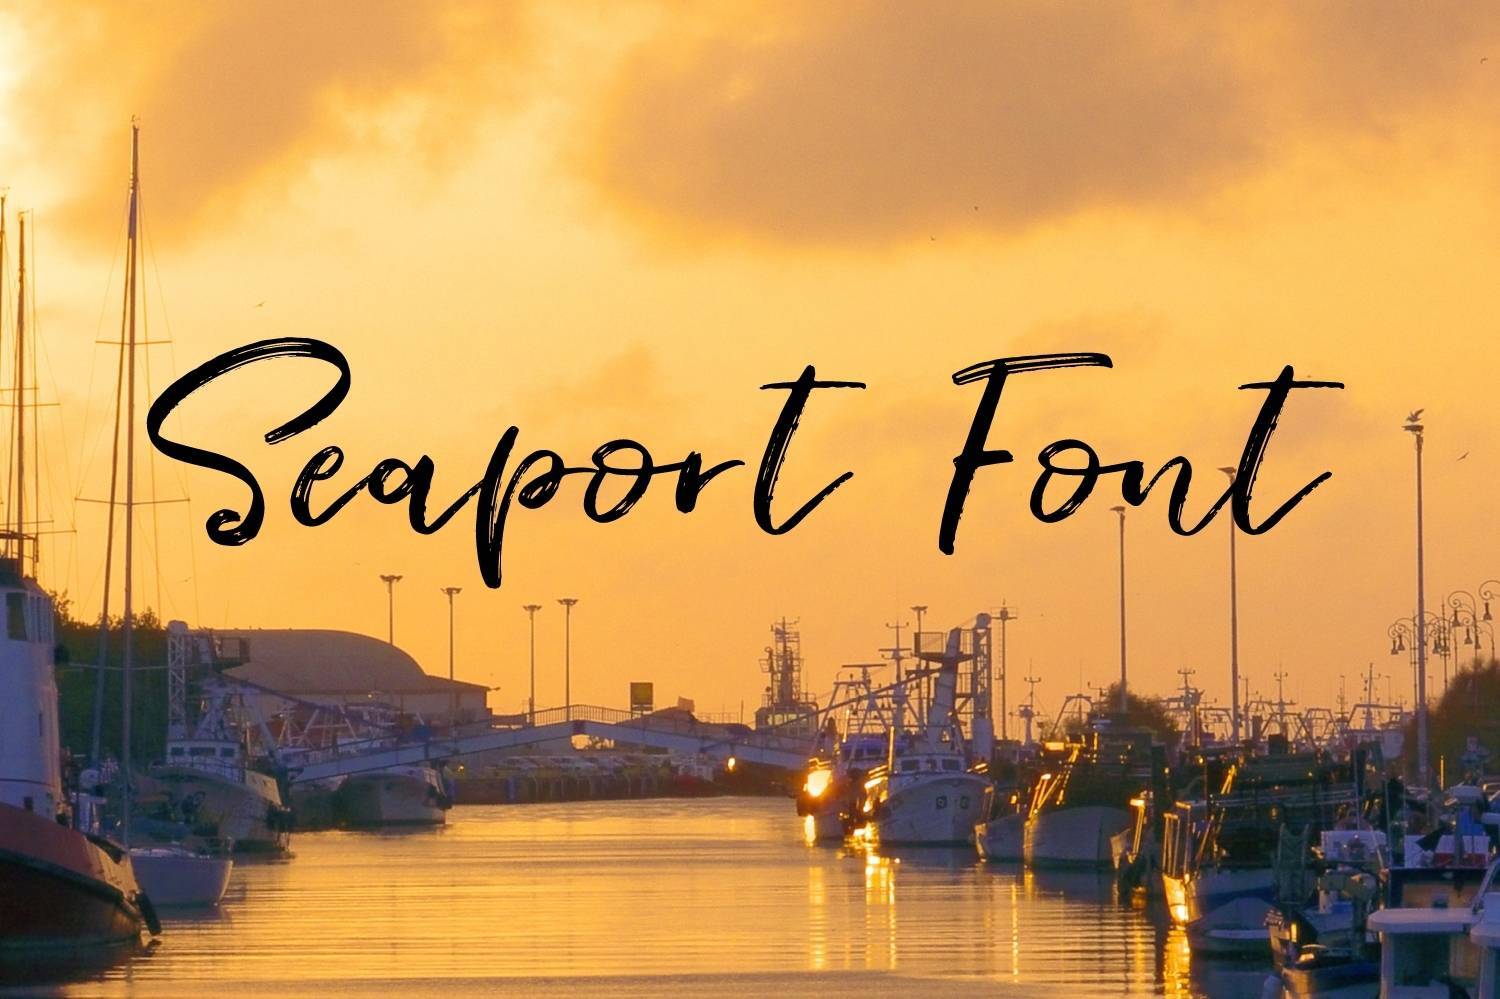 Seaport Script